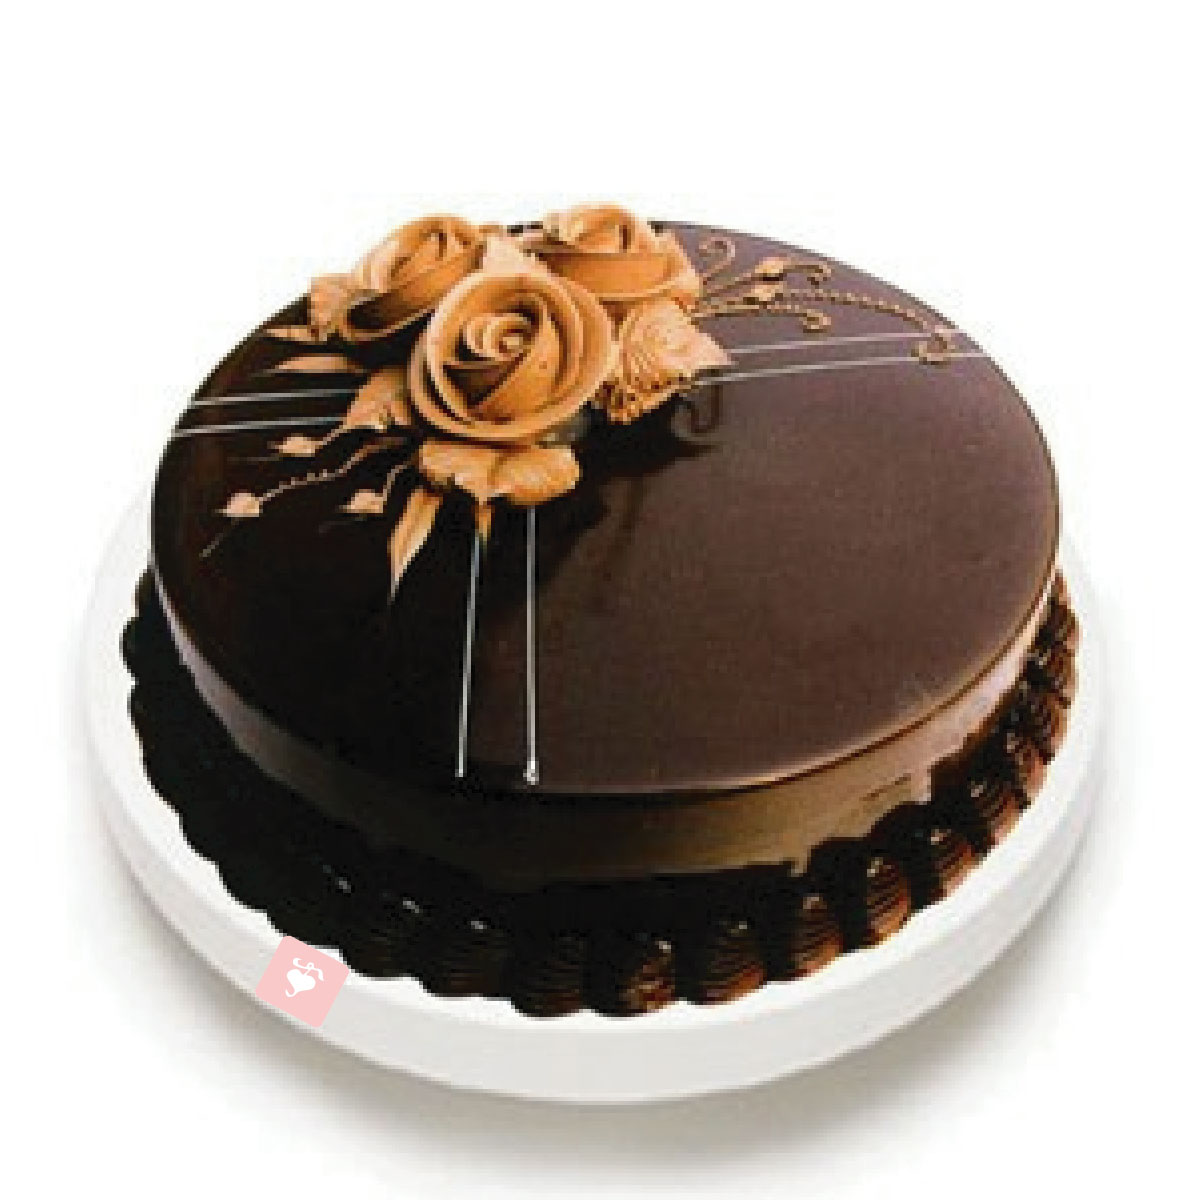 Chocolate Cake - 5 Star